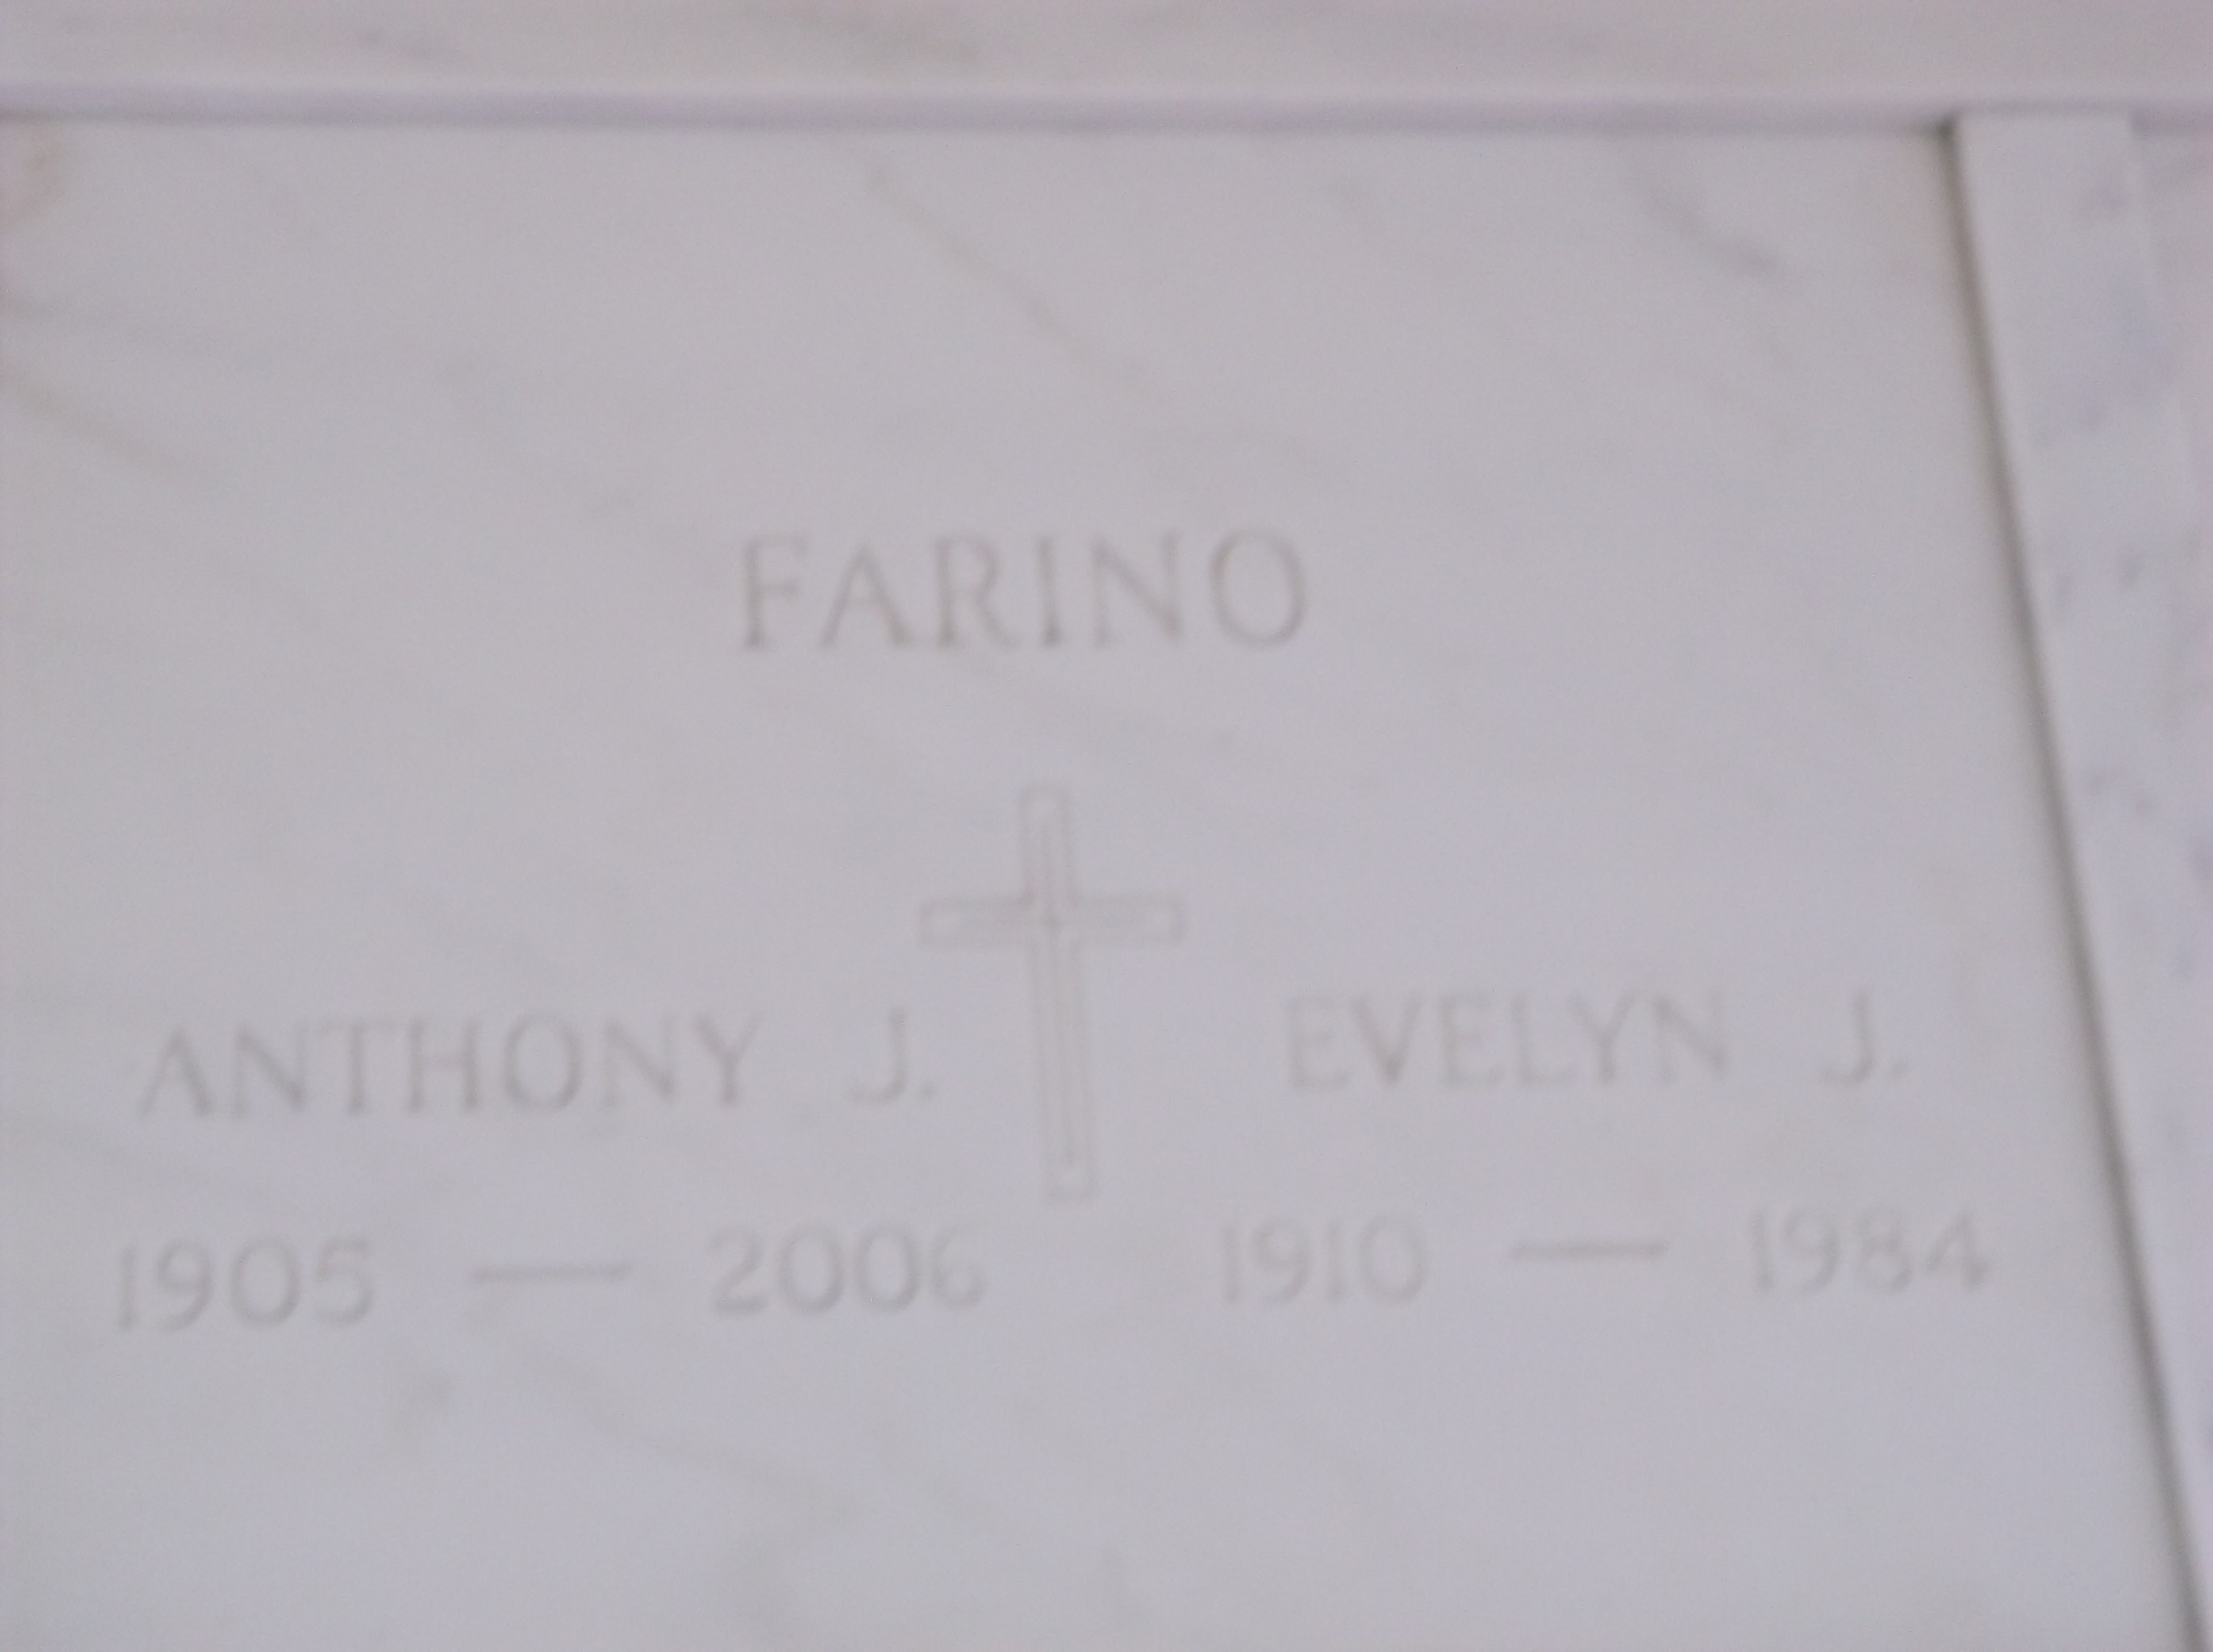 Anthony J Farino